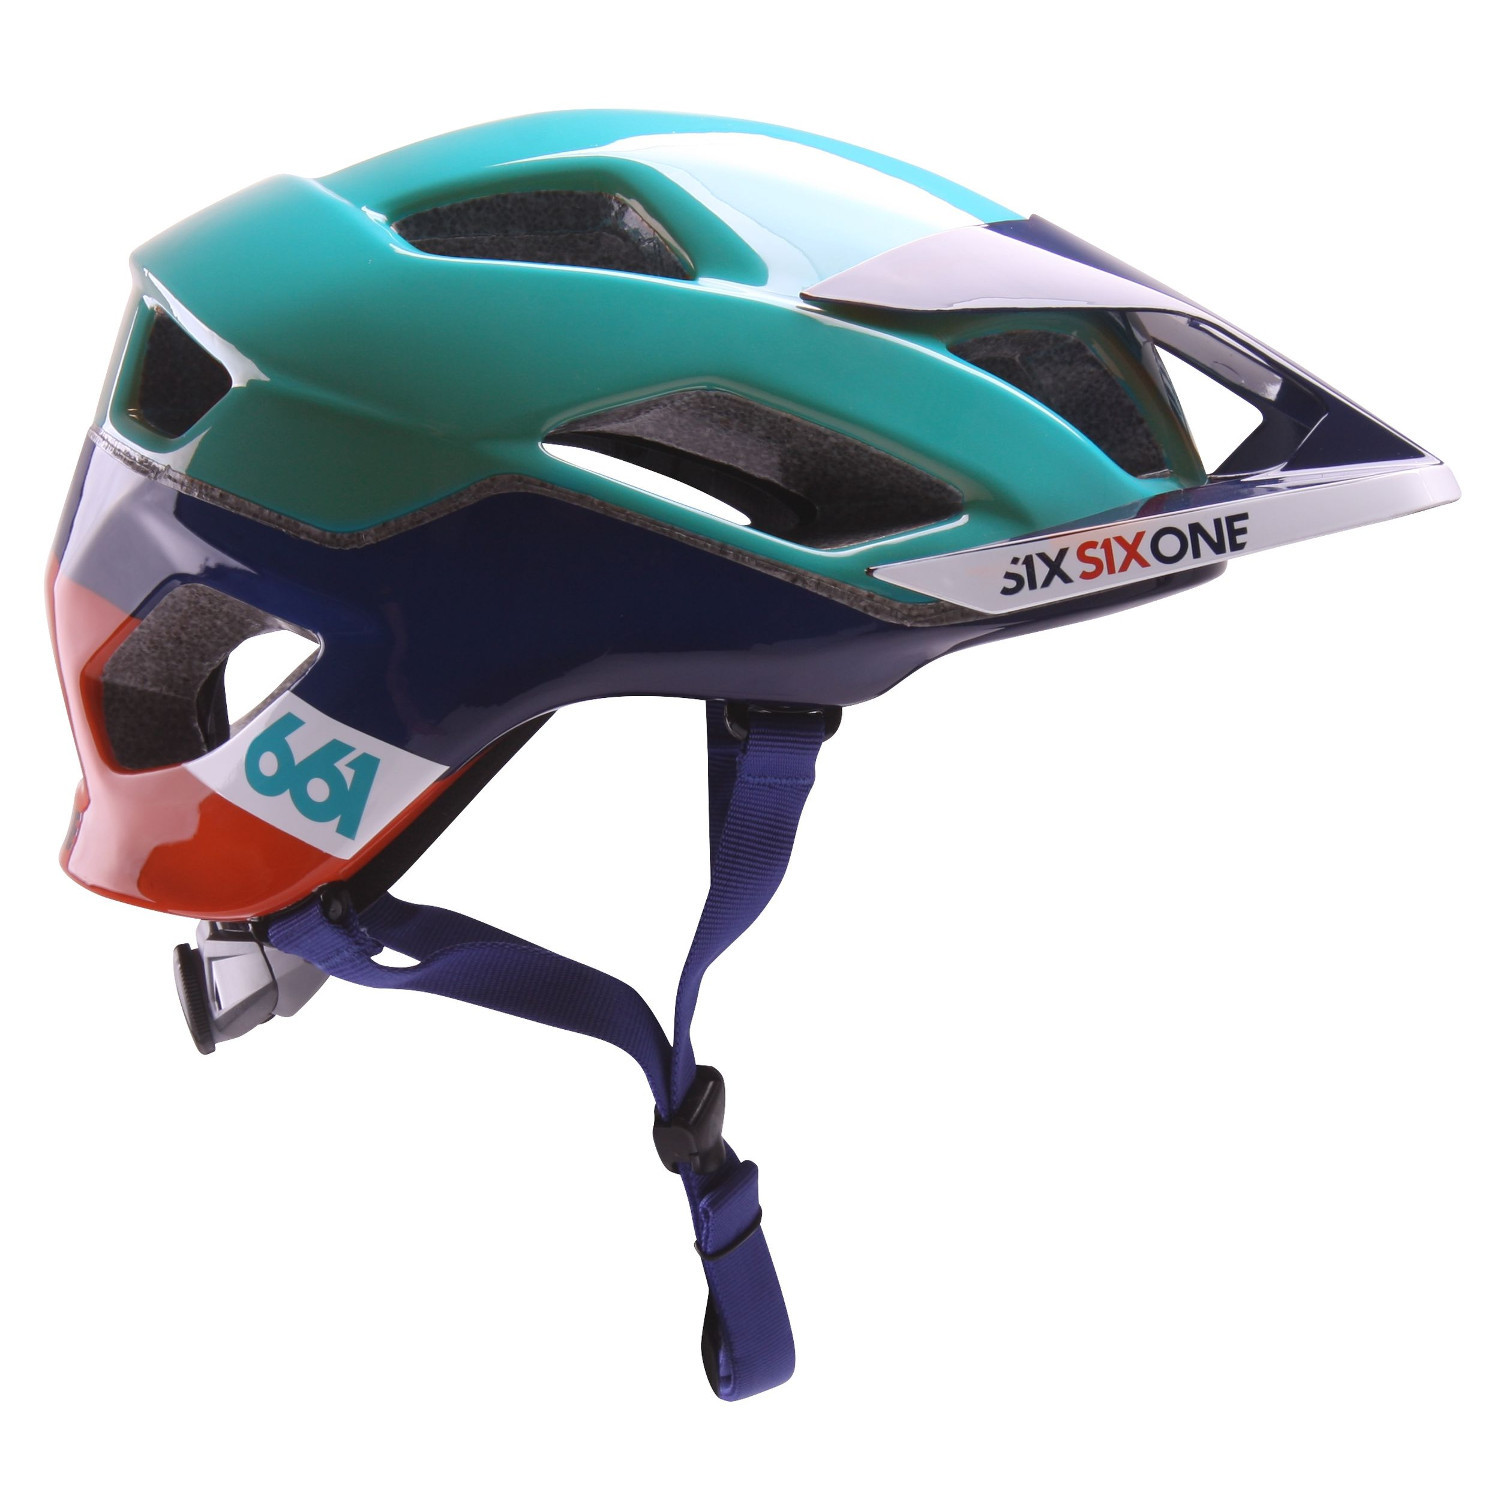 SixSixOne Enduro-MTB Helmet Evo AM 